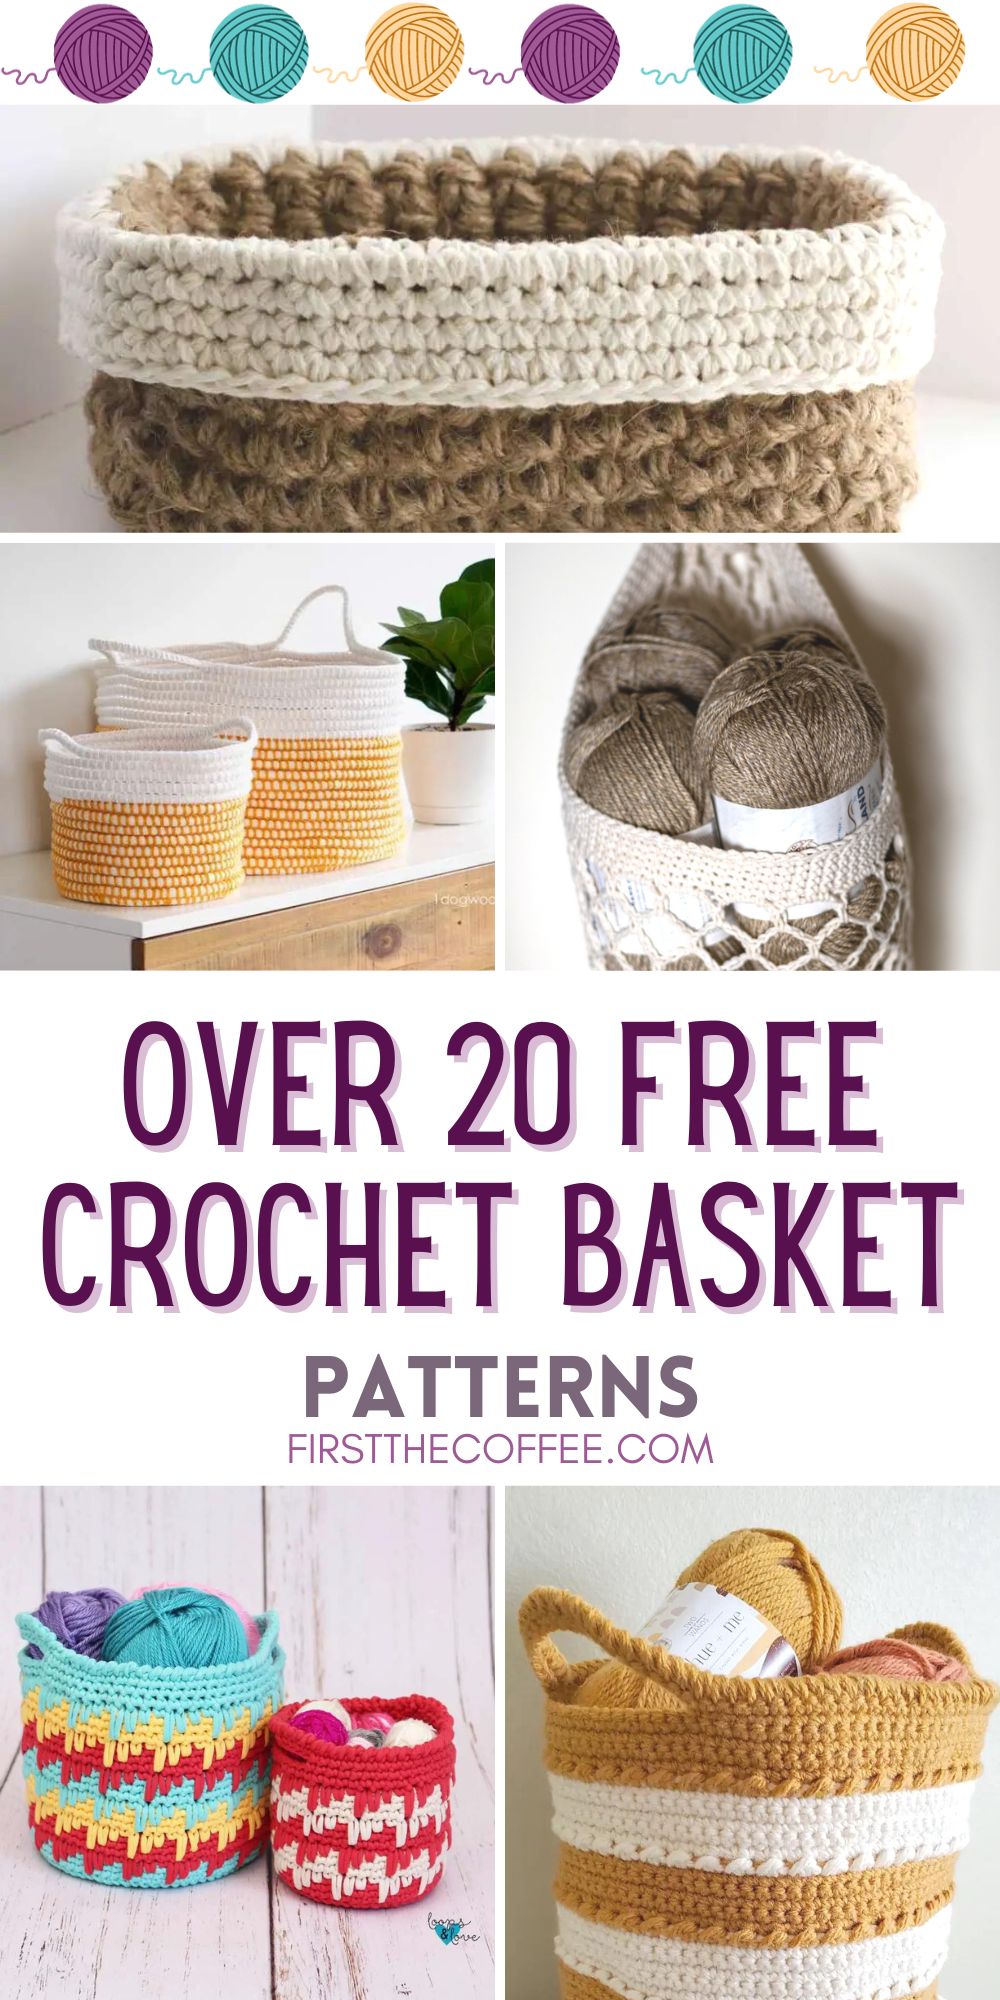 Over 20 Free Crochet Basket Patterns